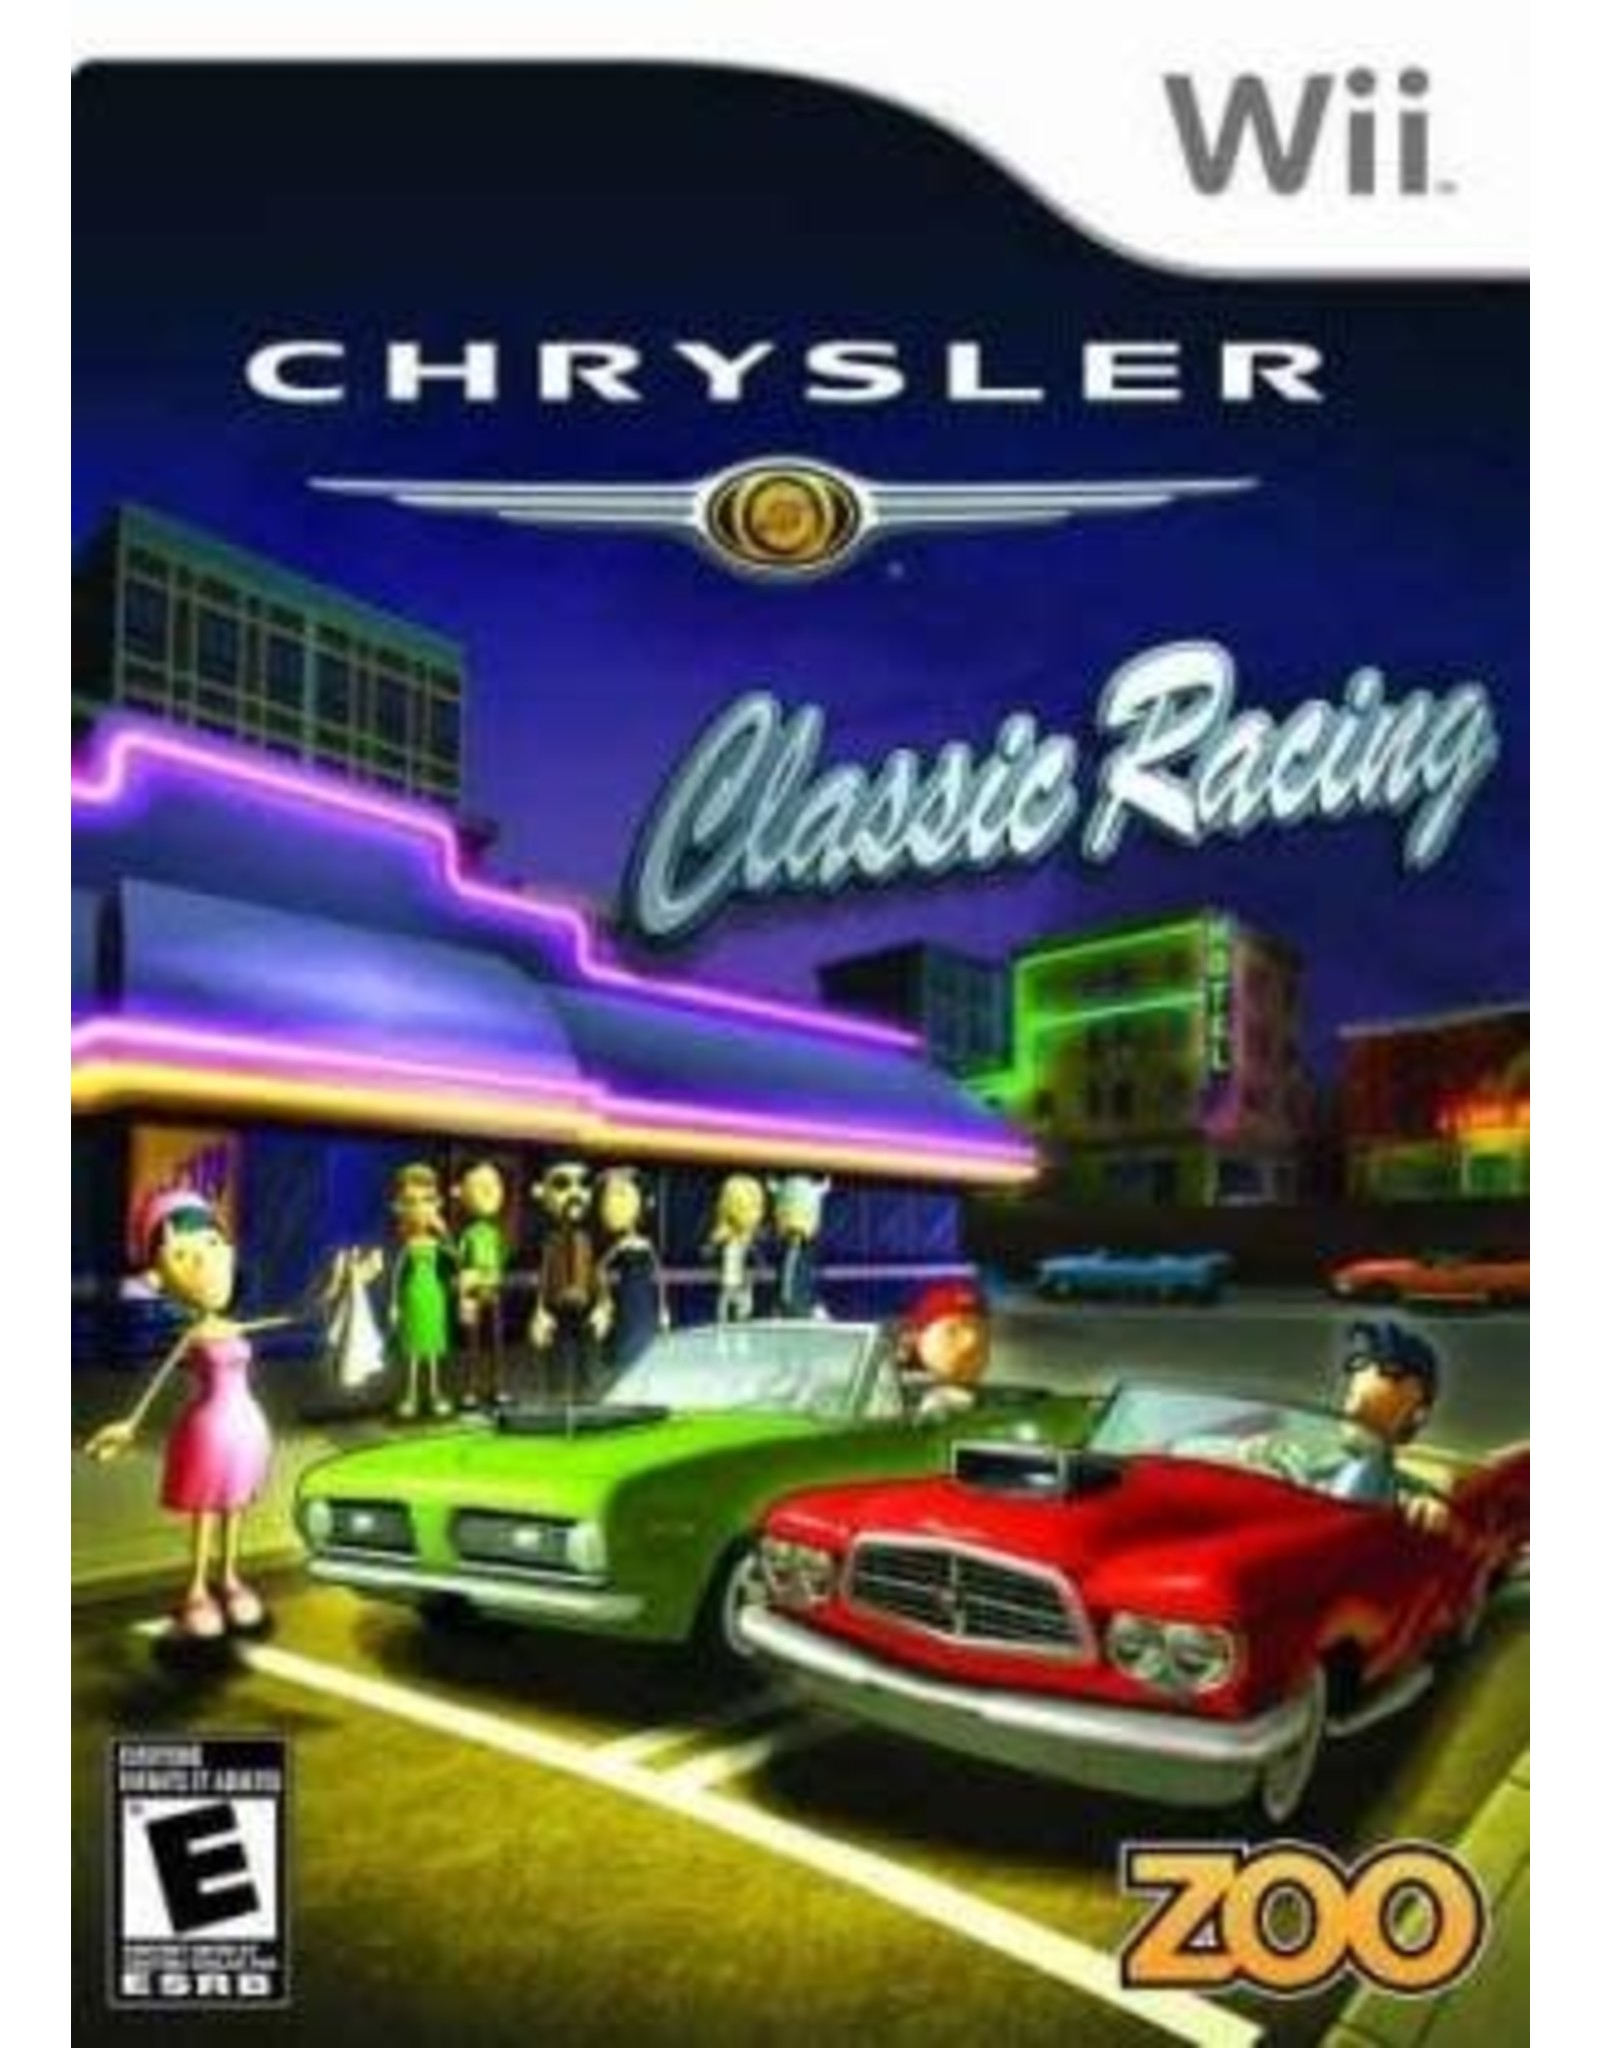 Wii Chrysler Classic Racing (CiB)